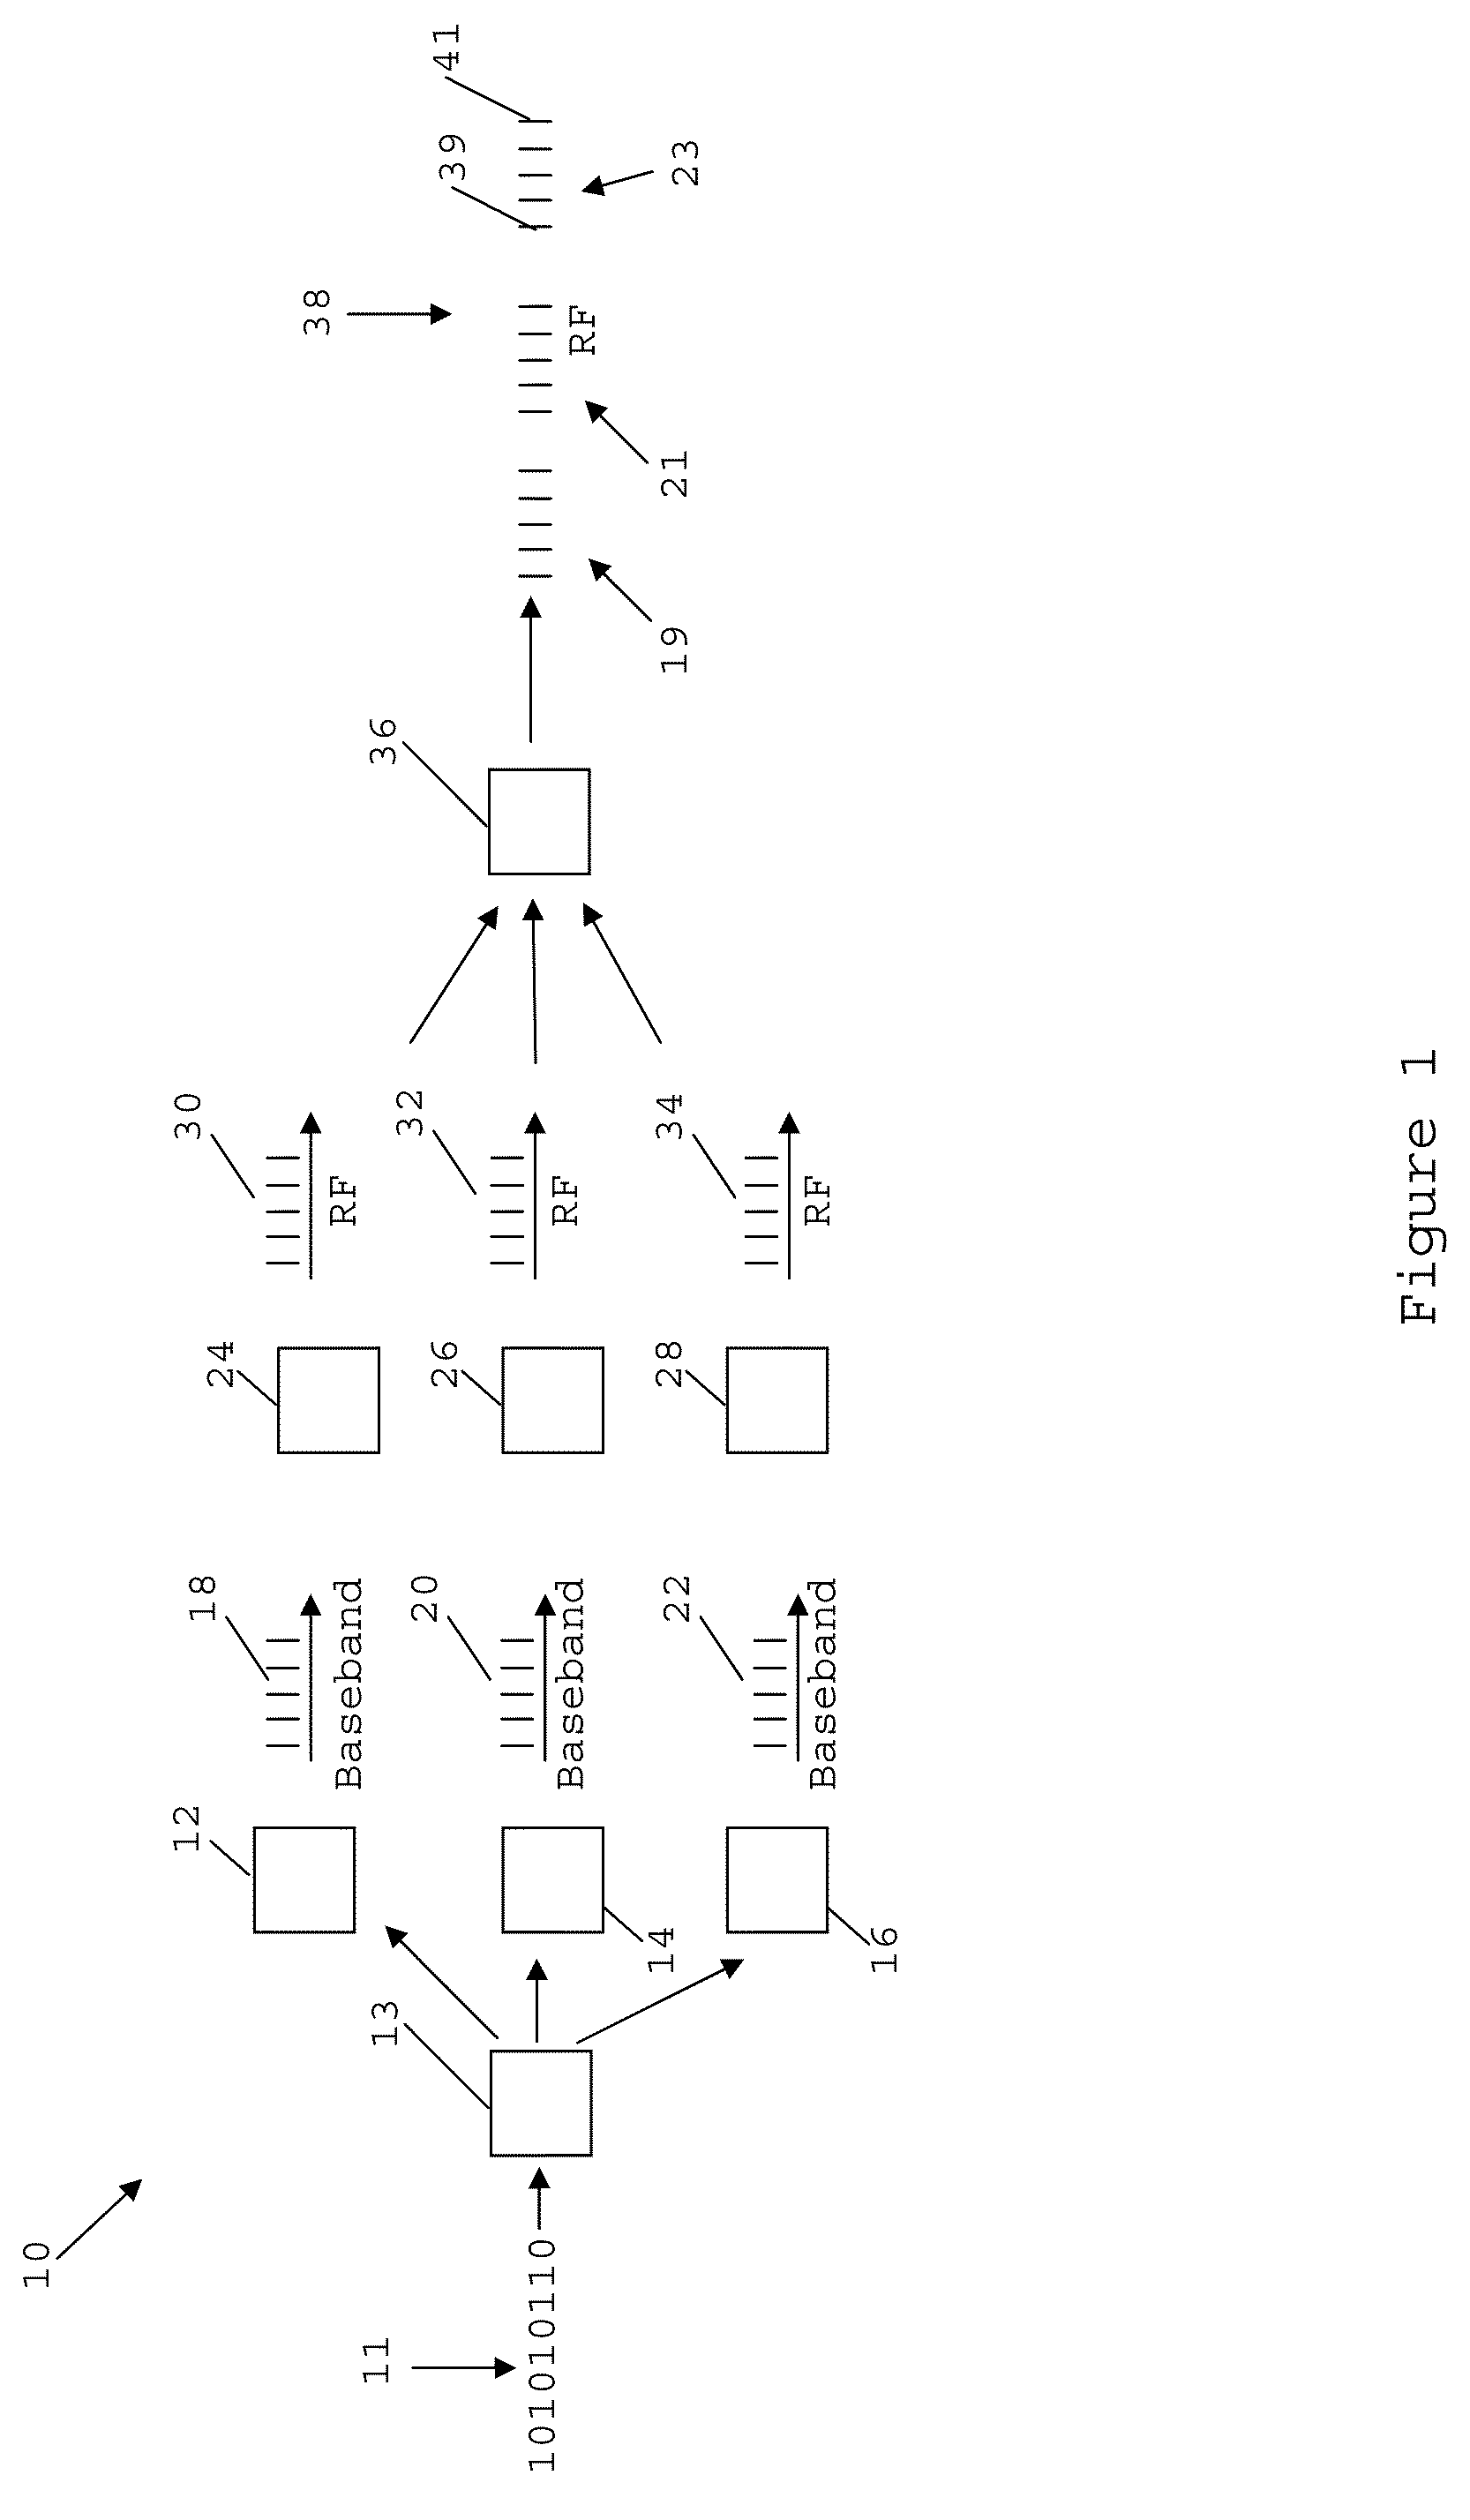 Signal method and apparatus